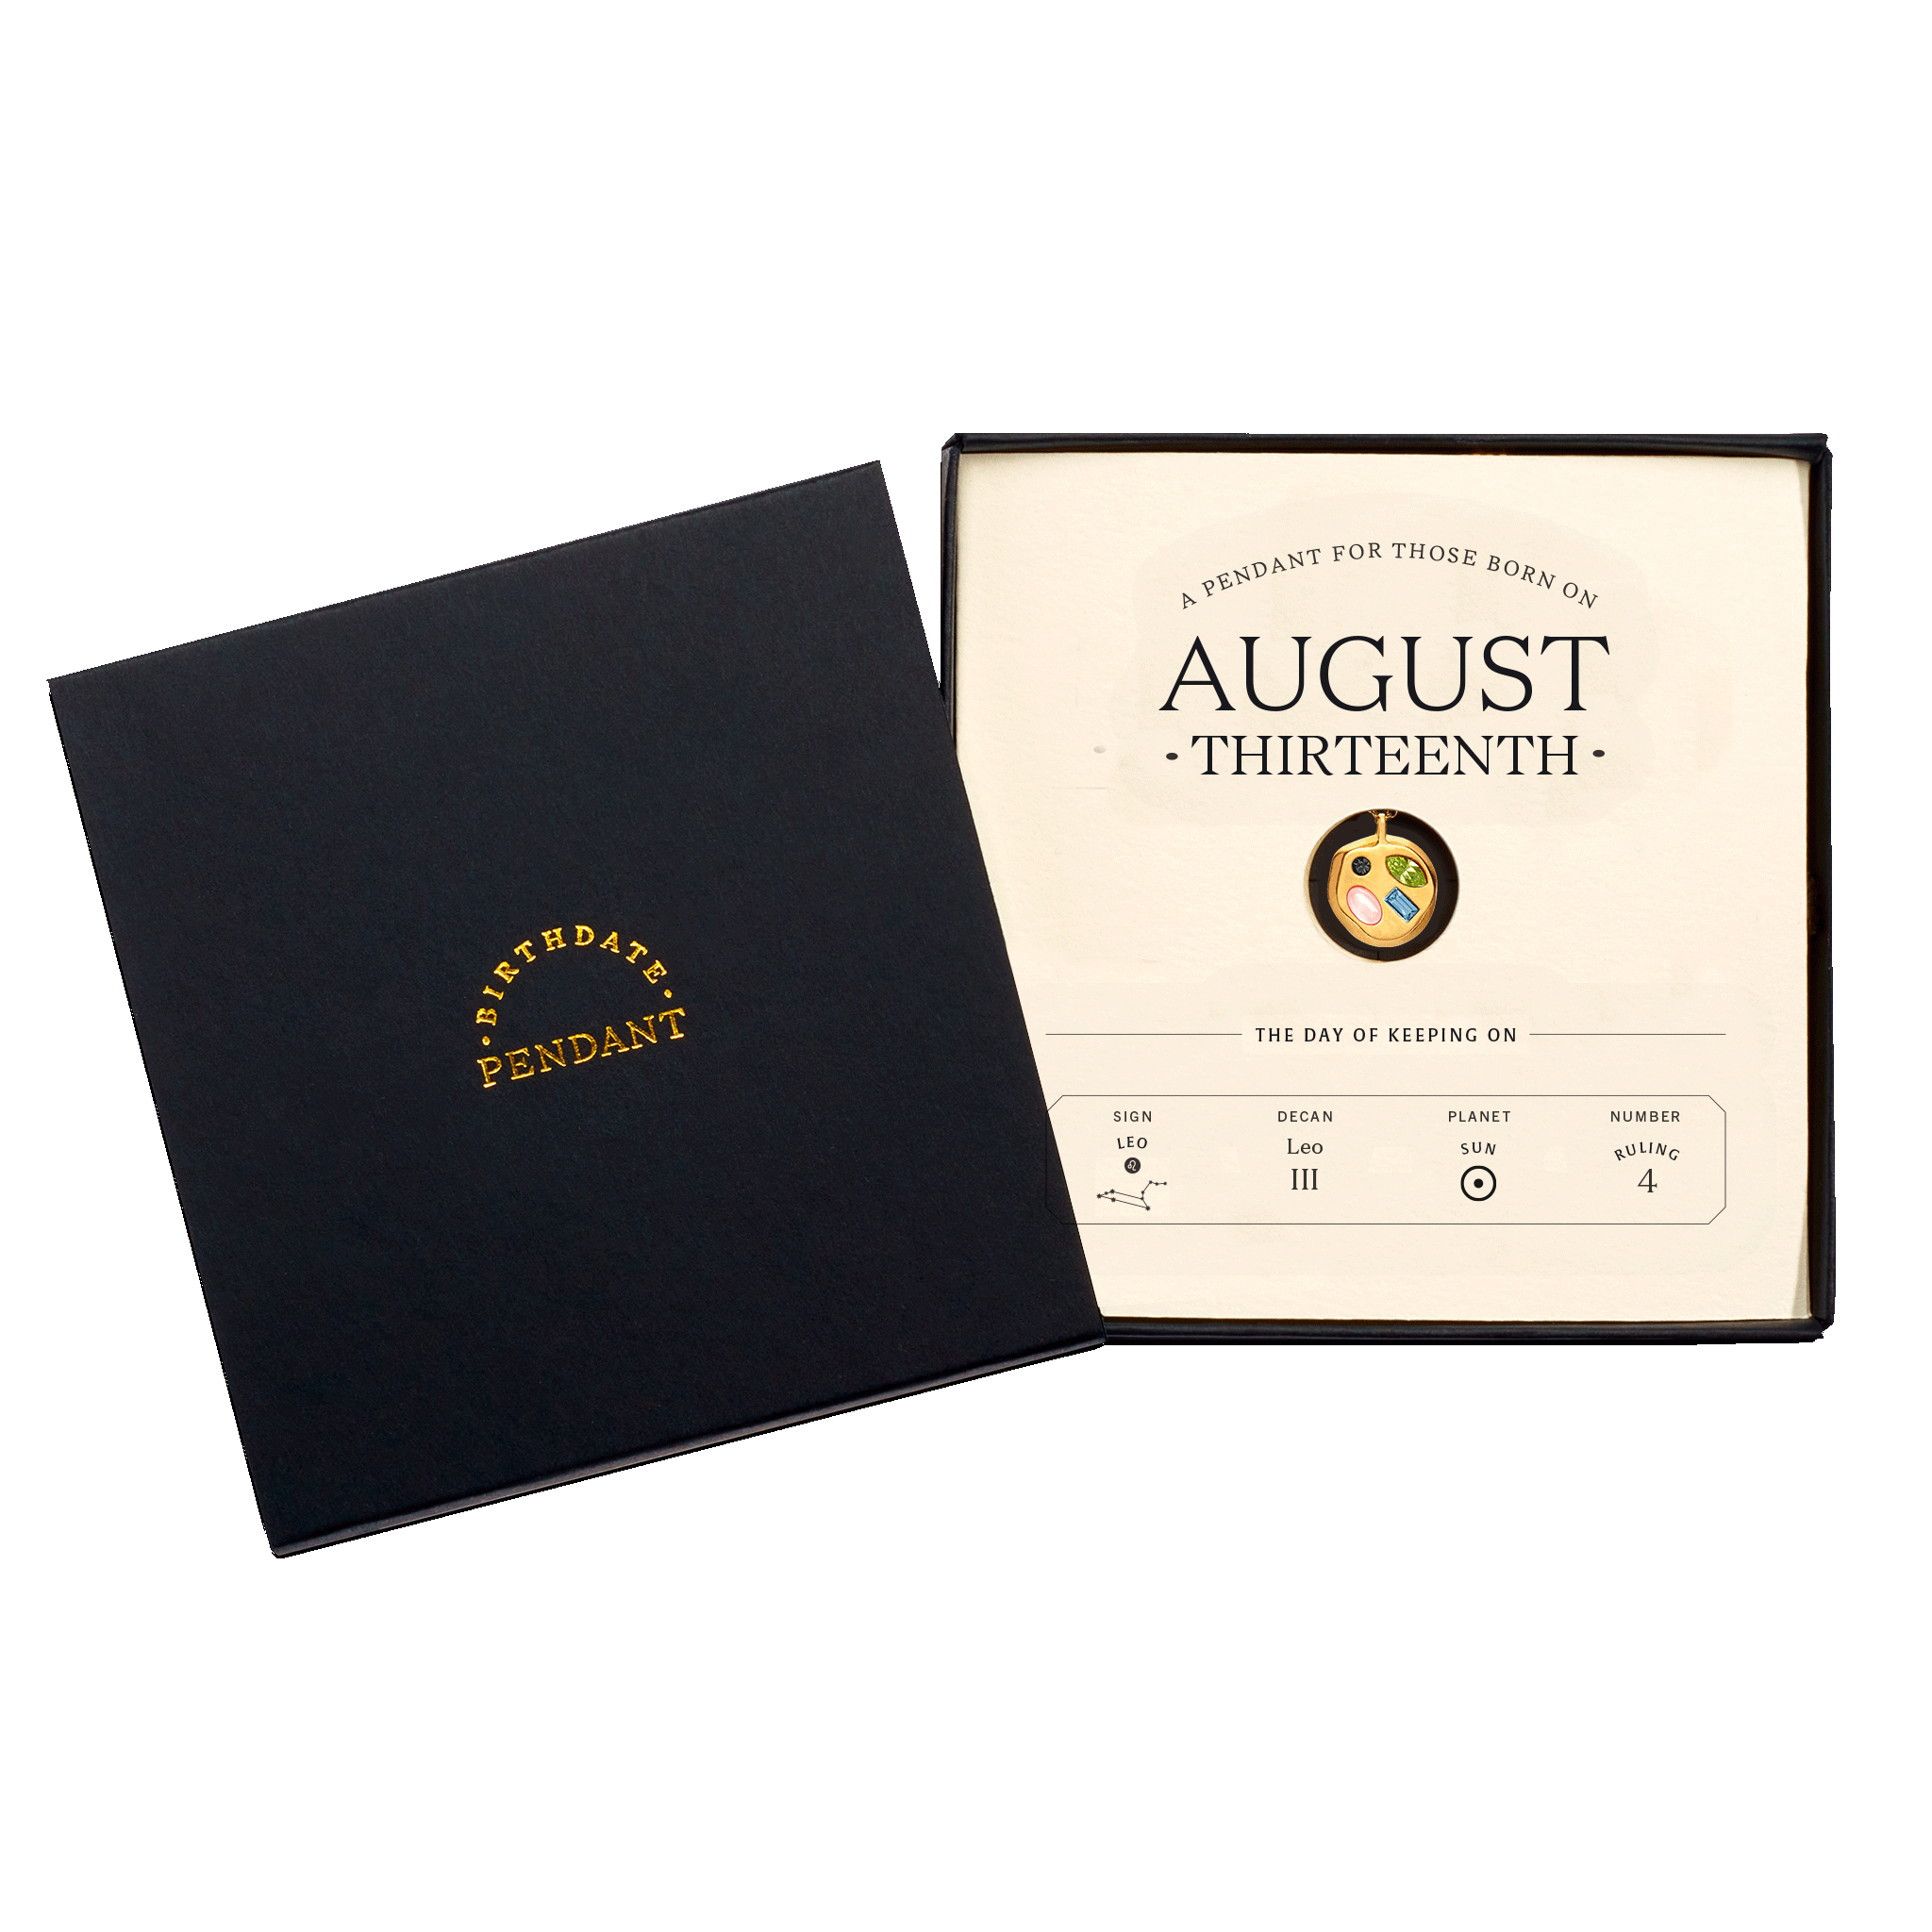 The August Thirteenth Pendant inside its box